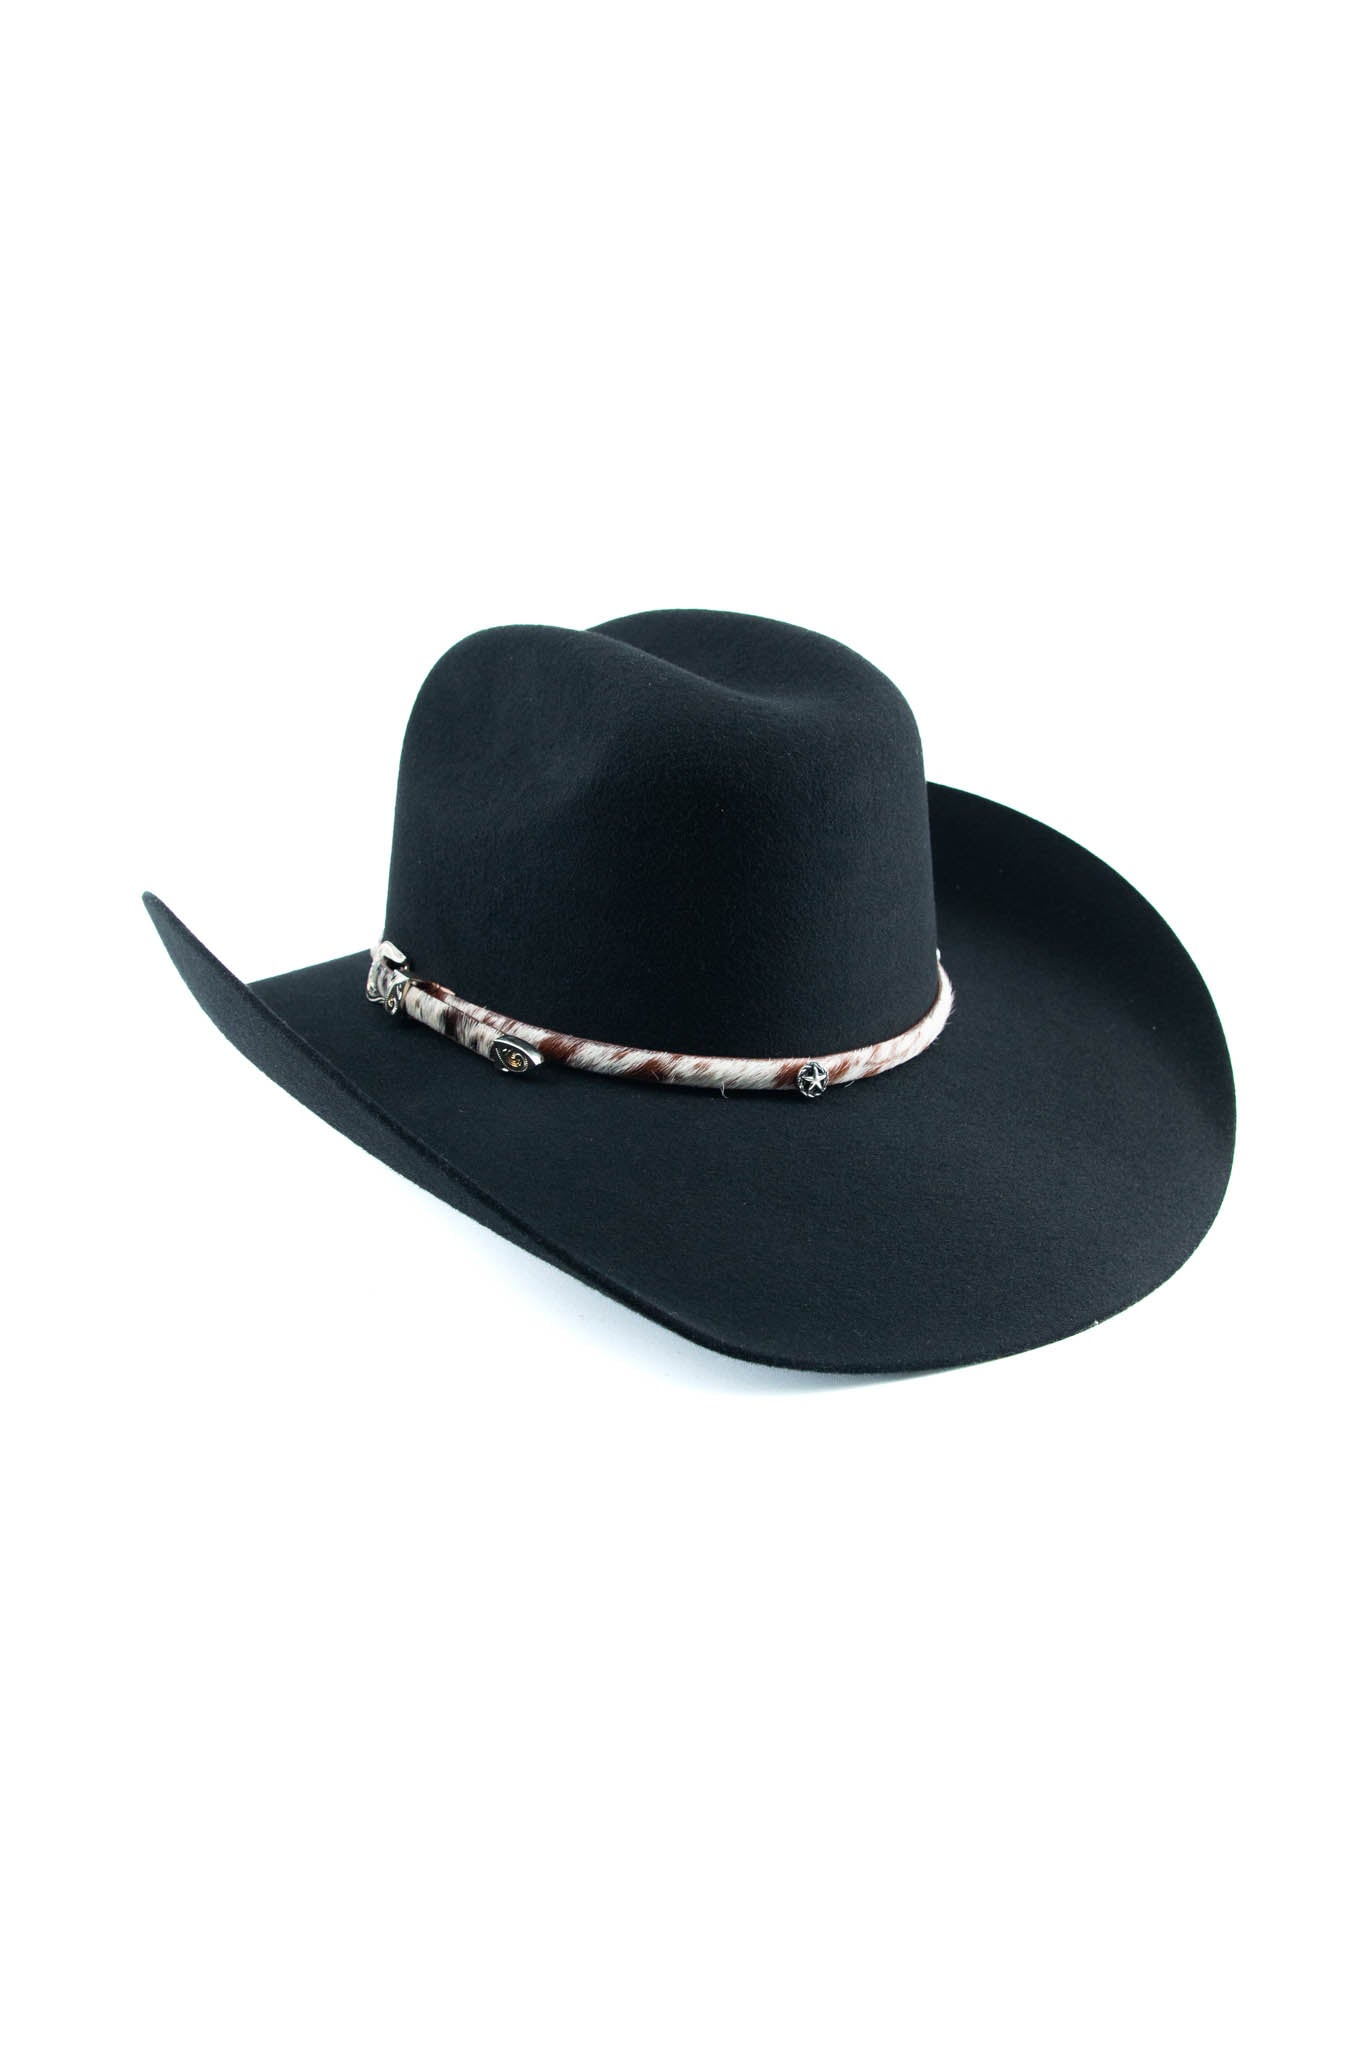 Star Concho Cowhide Hatband